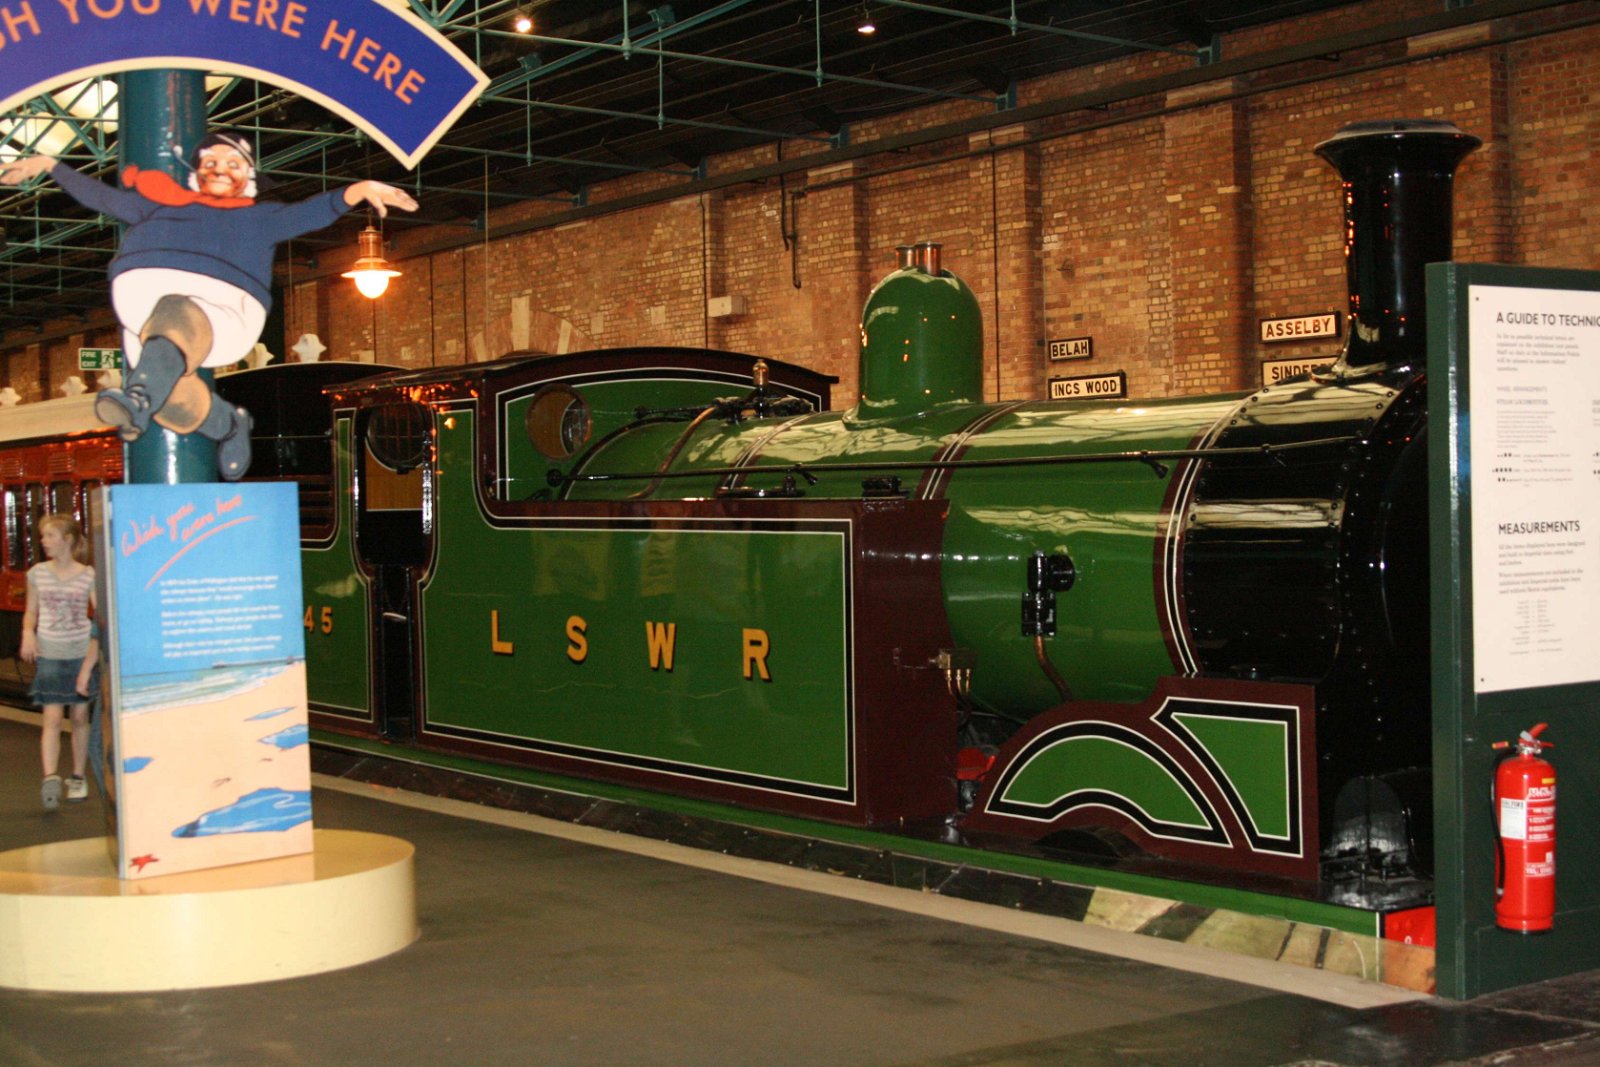 National Railway Museum (York) - Visitor Information & Reviews